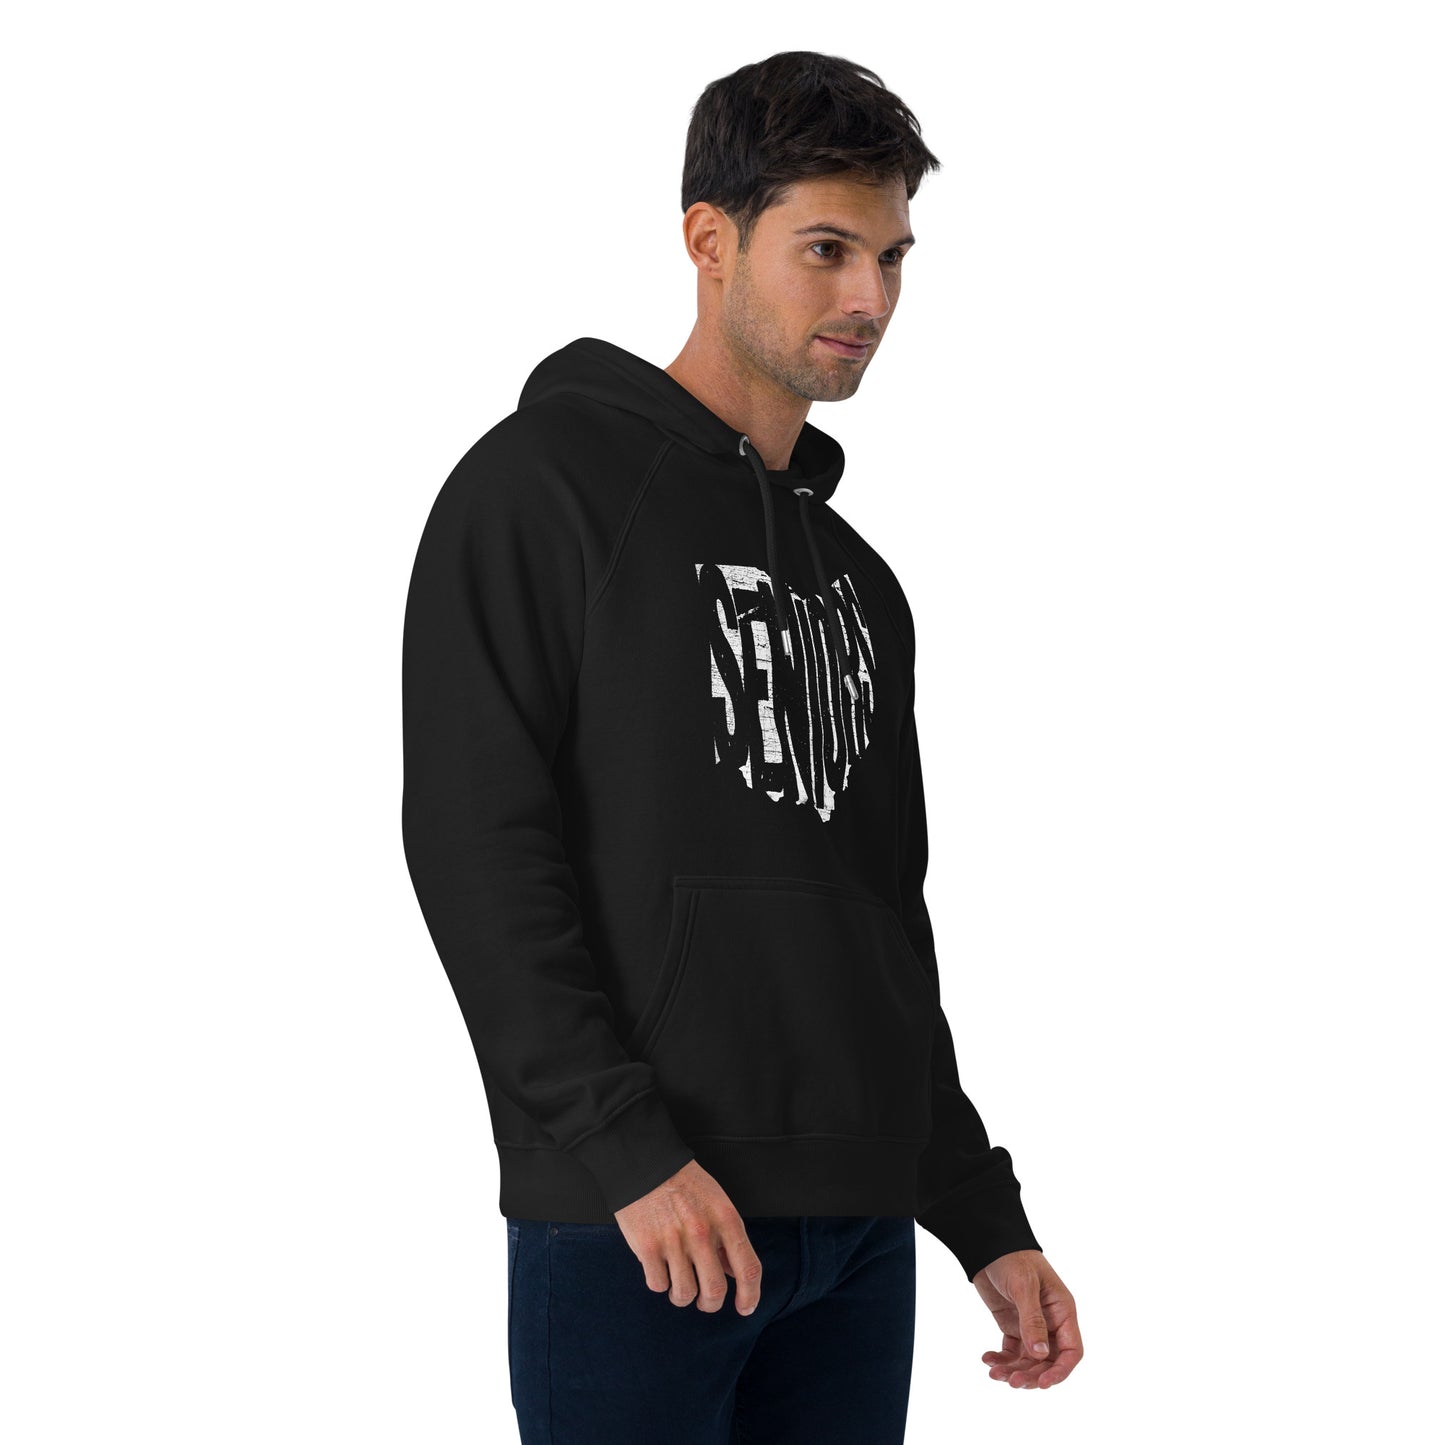 SENIORS (knockout) OH STATE SHAPE-Unisex eco raglan hoodie